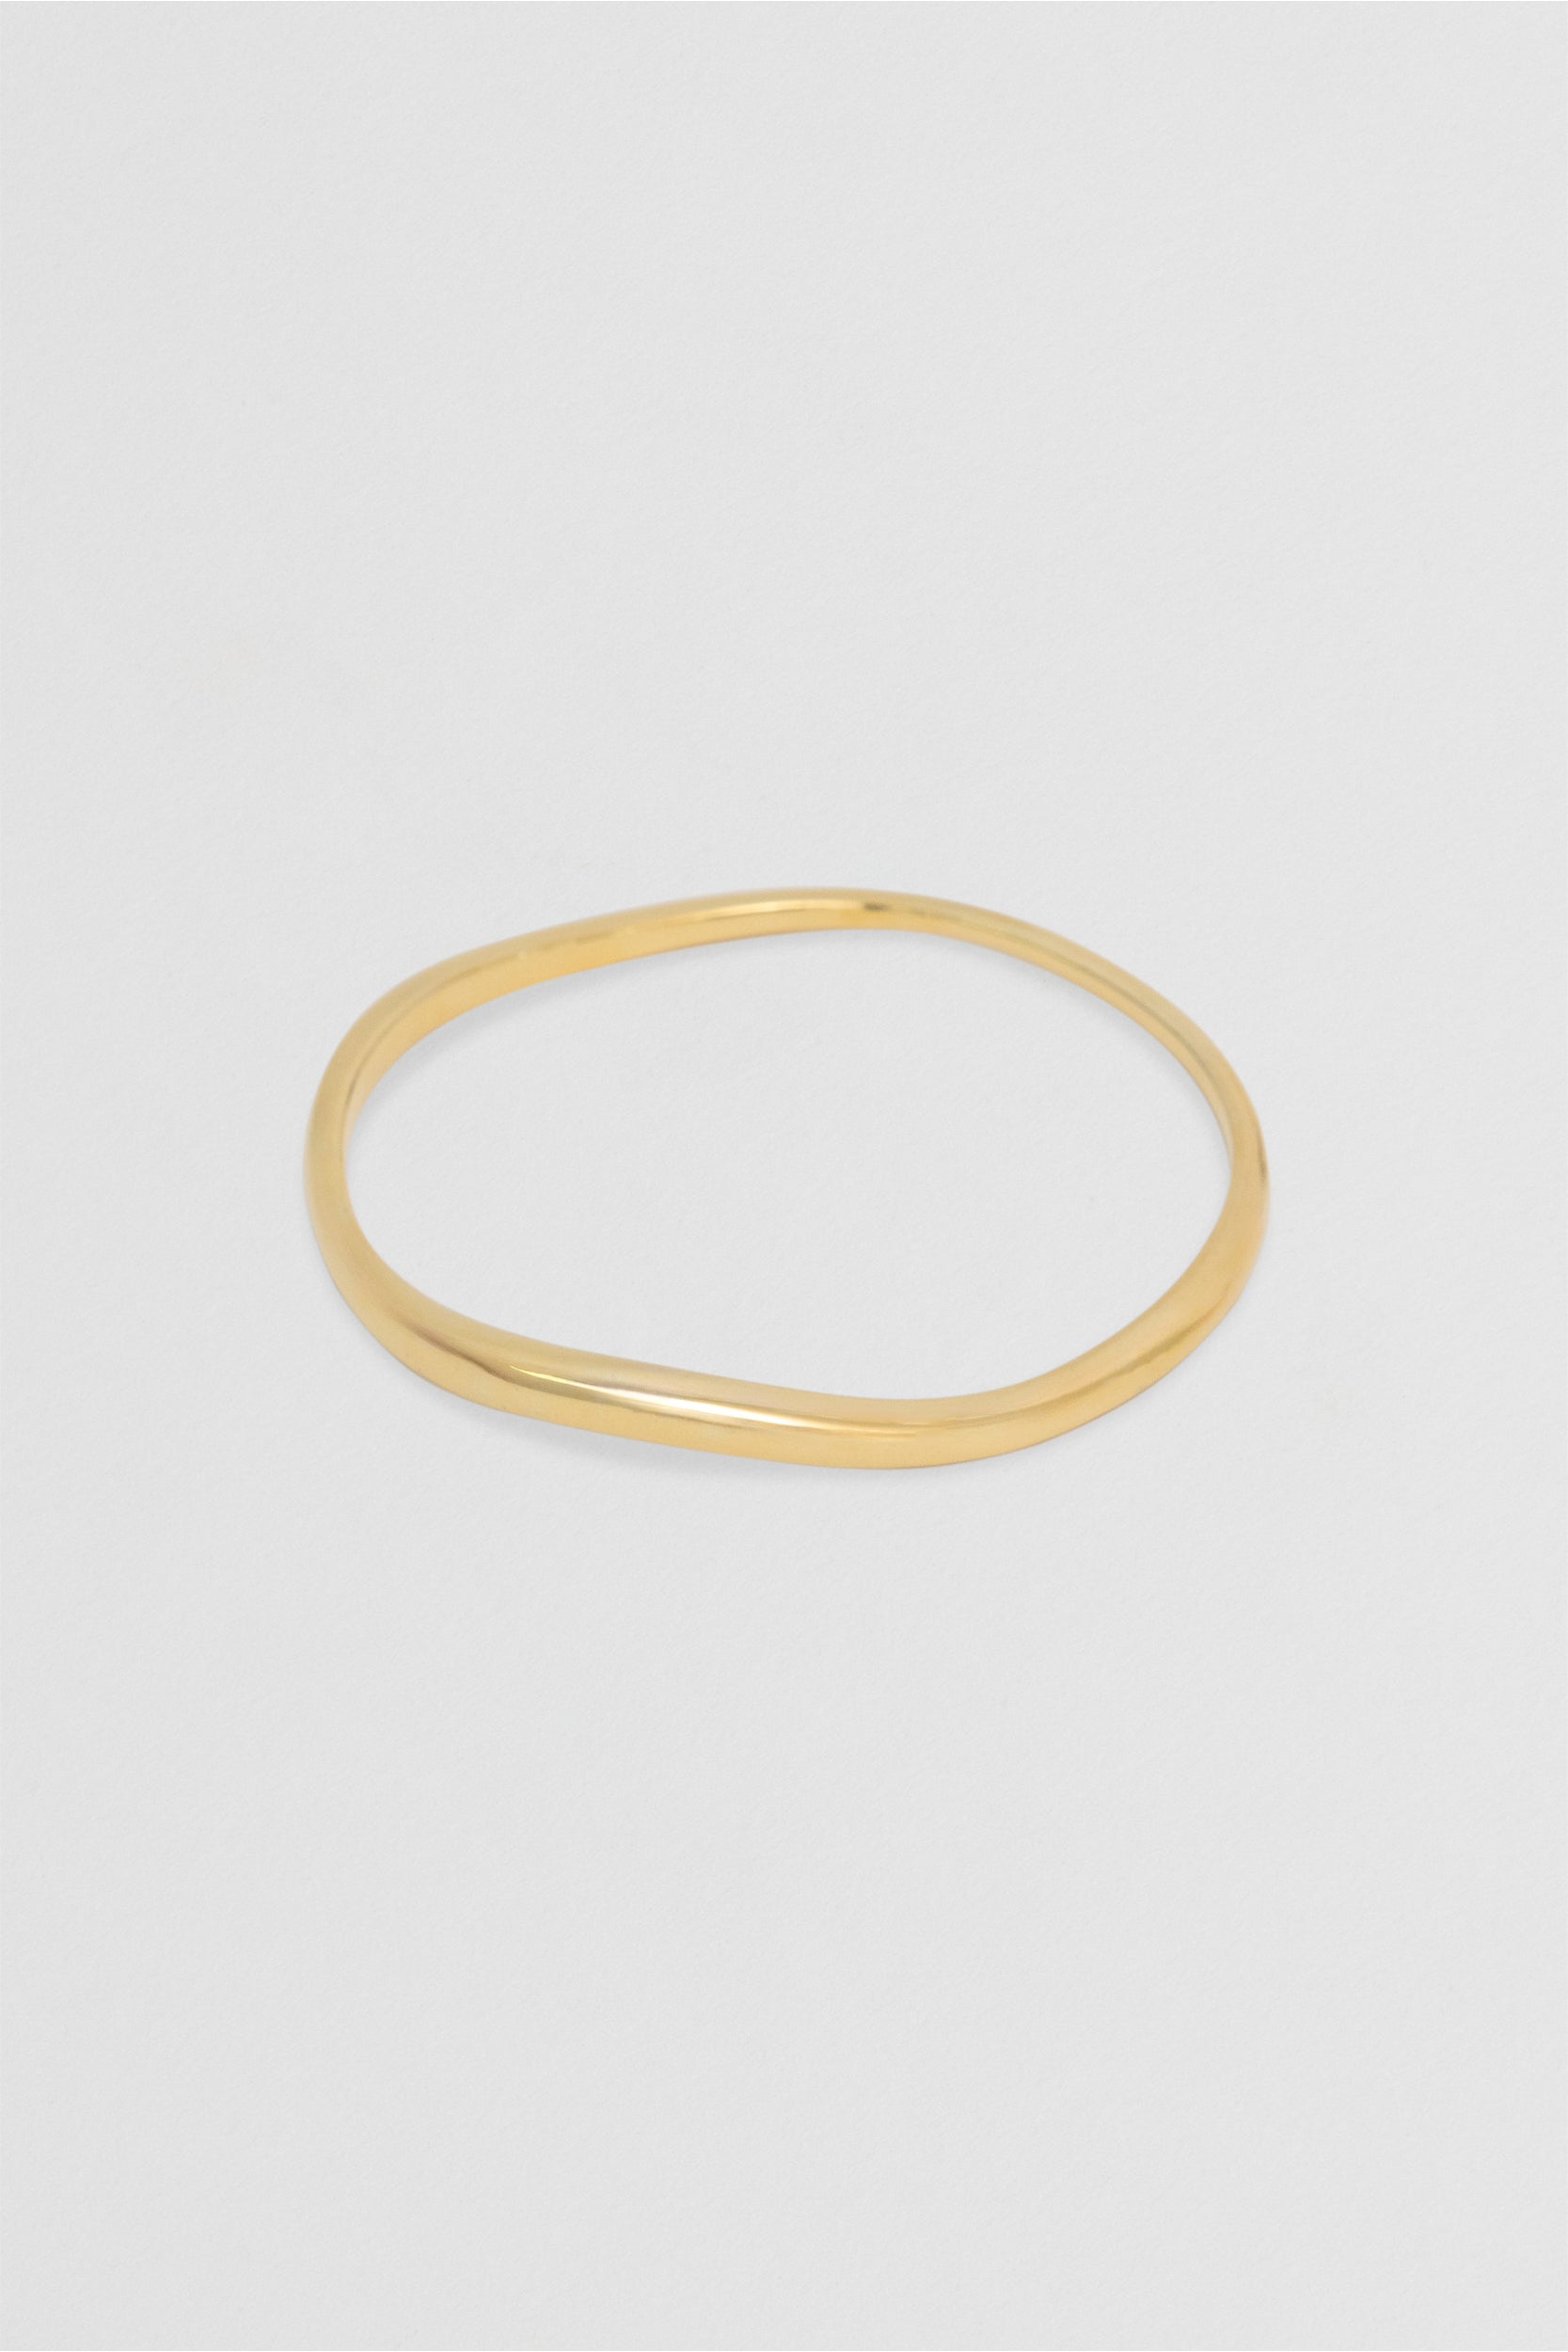 Close up Fundamental Bangle 14k Vermeil: Organic-shaped bracelet in recycled gold.